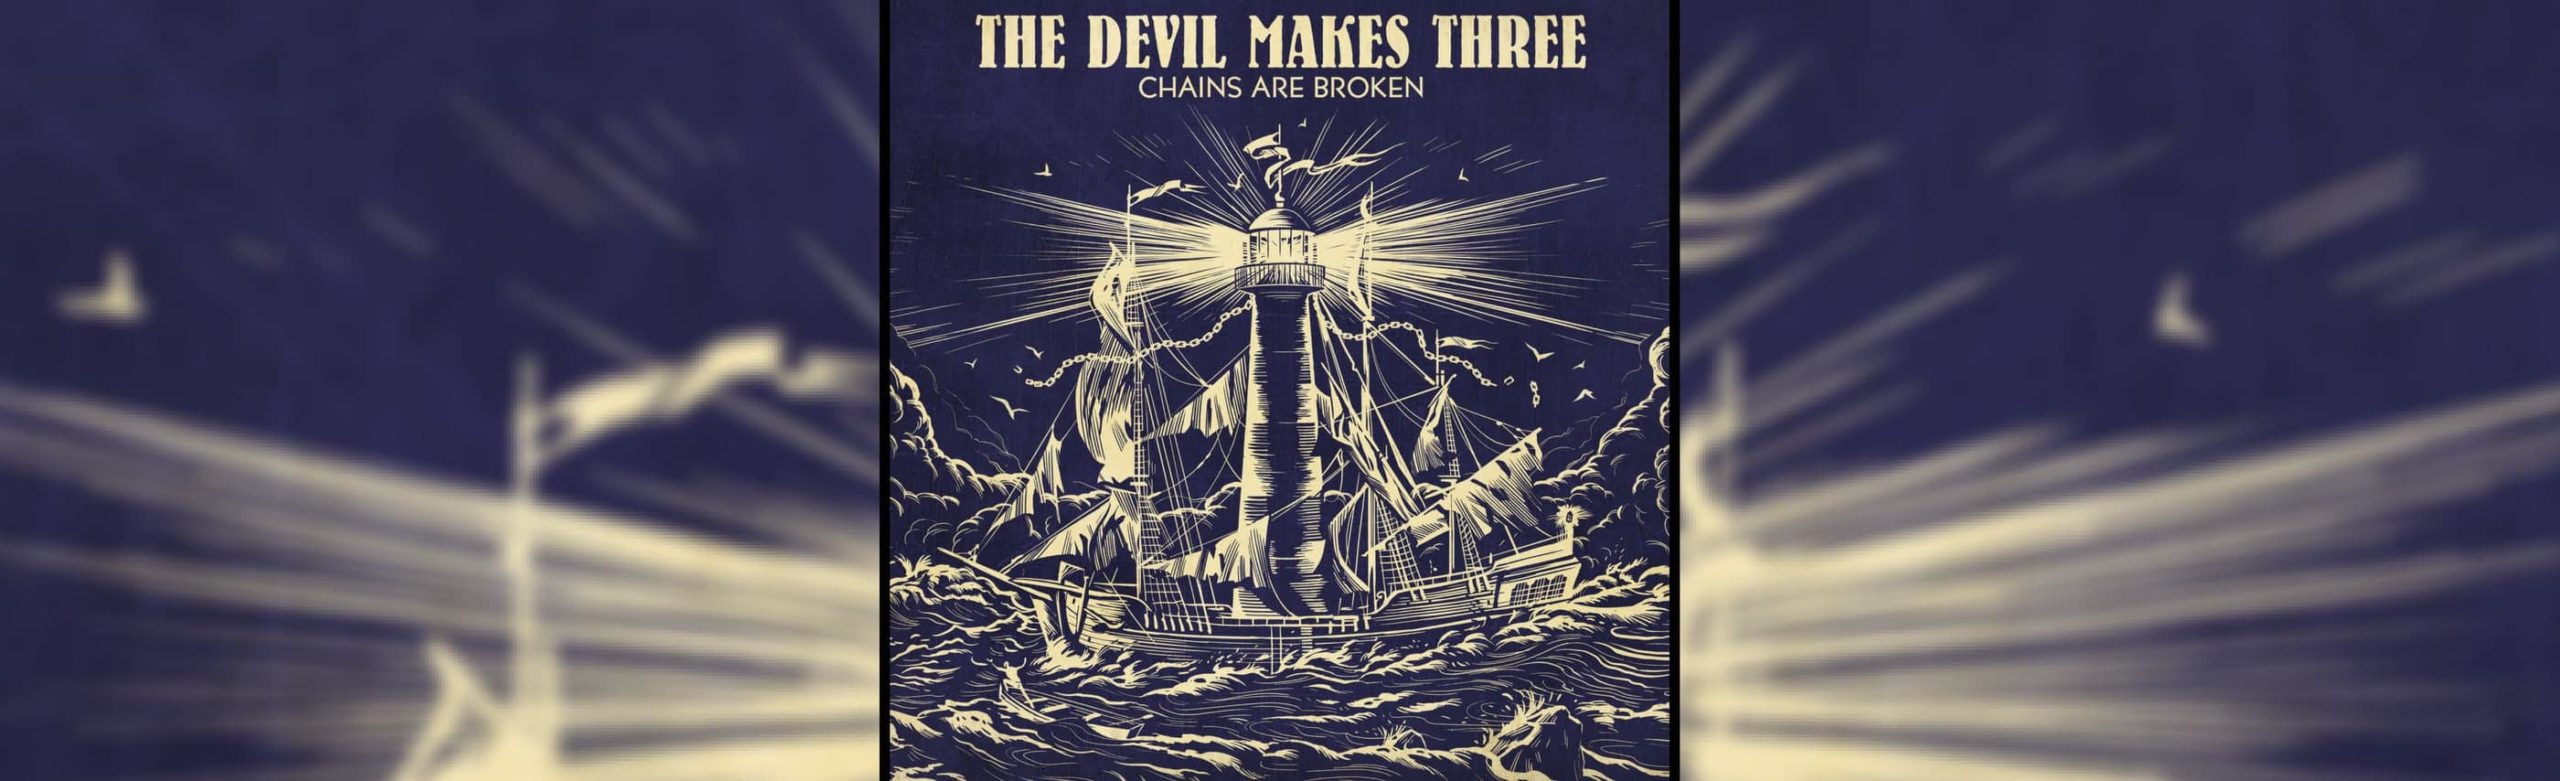 LISTEN: The Devil Makes Three Makes Four on New Album Image